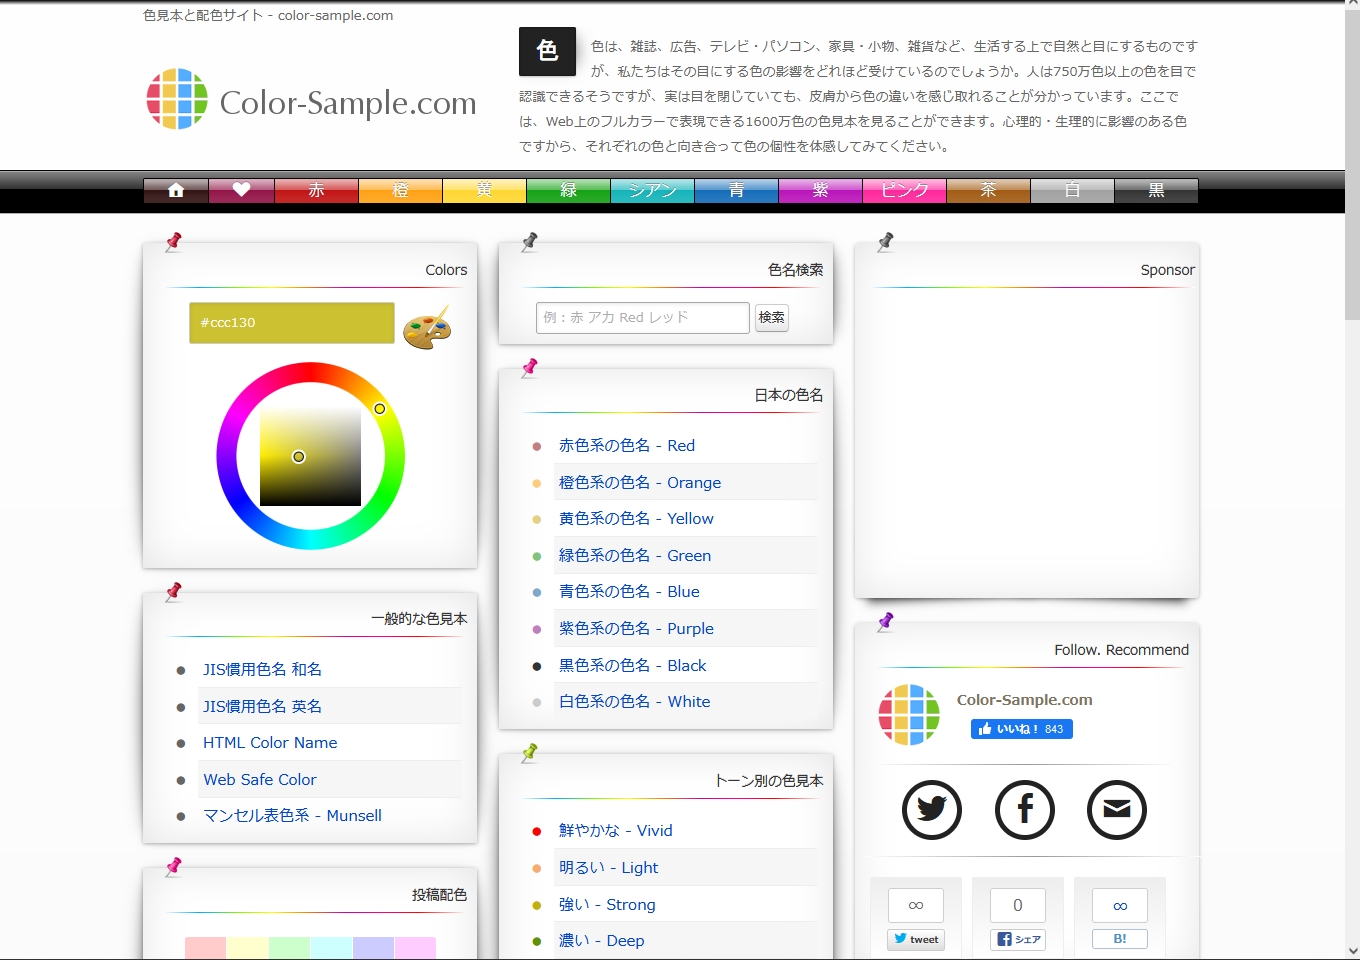 Color-Sample.com